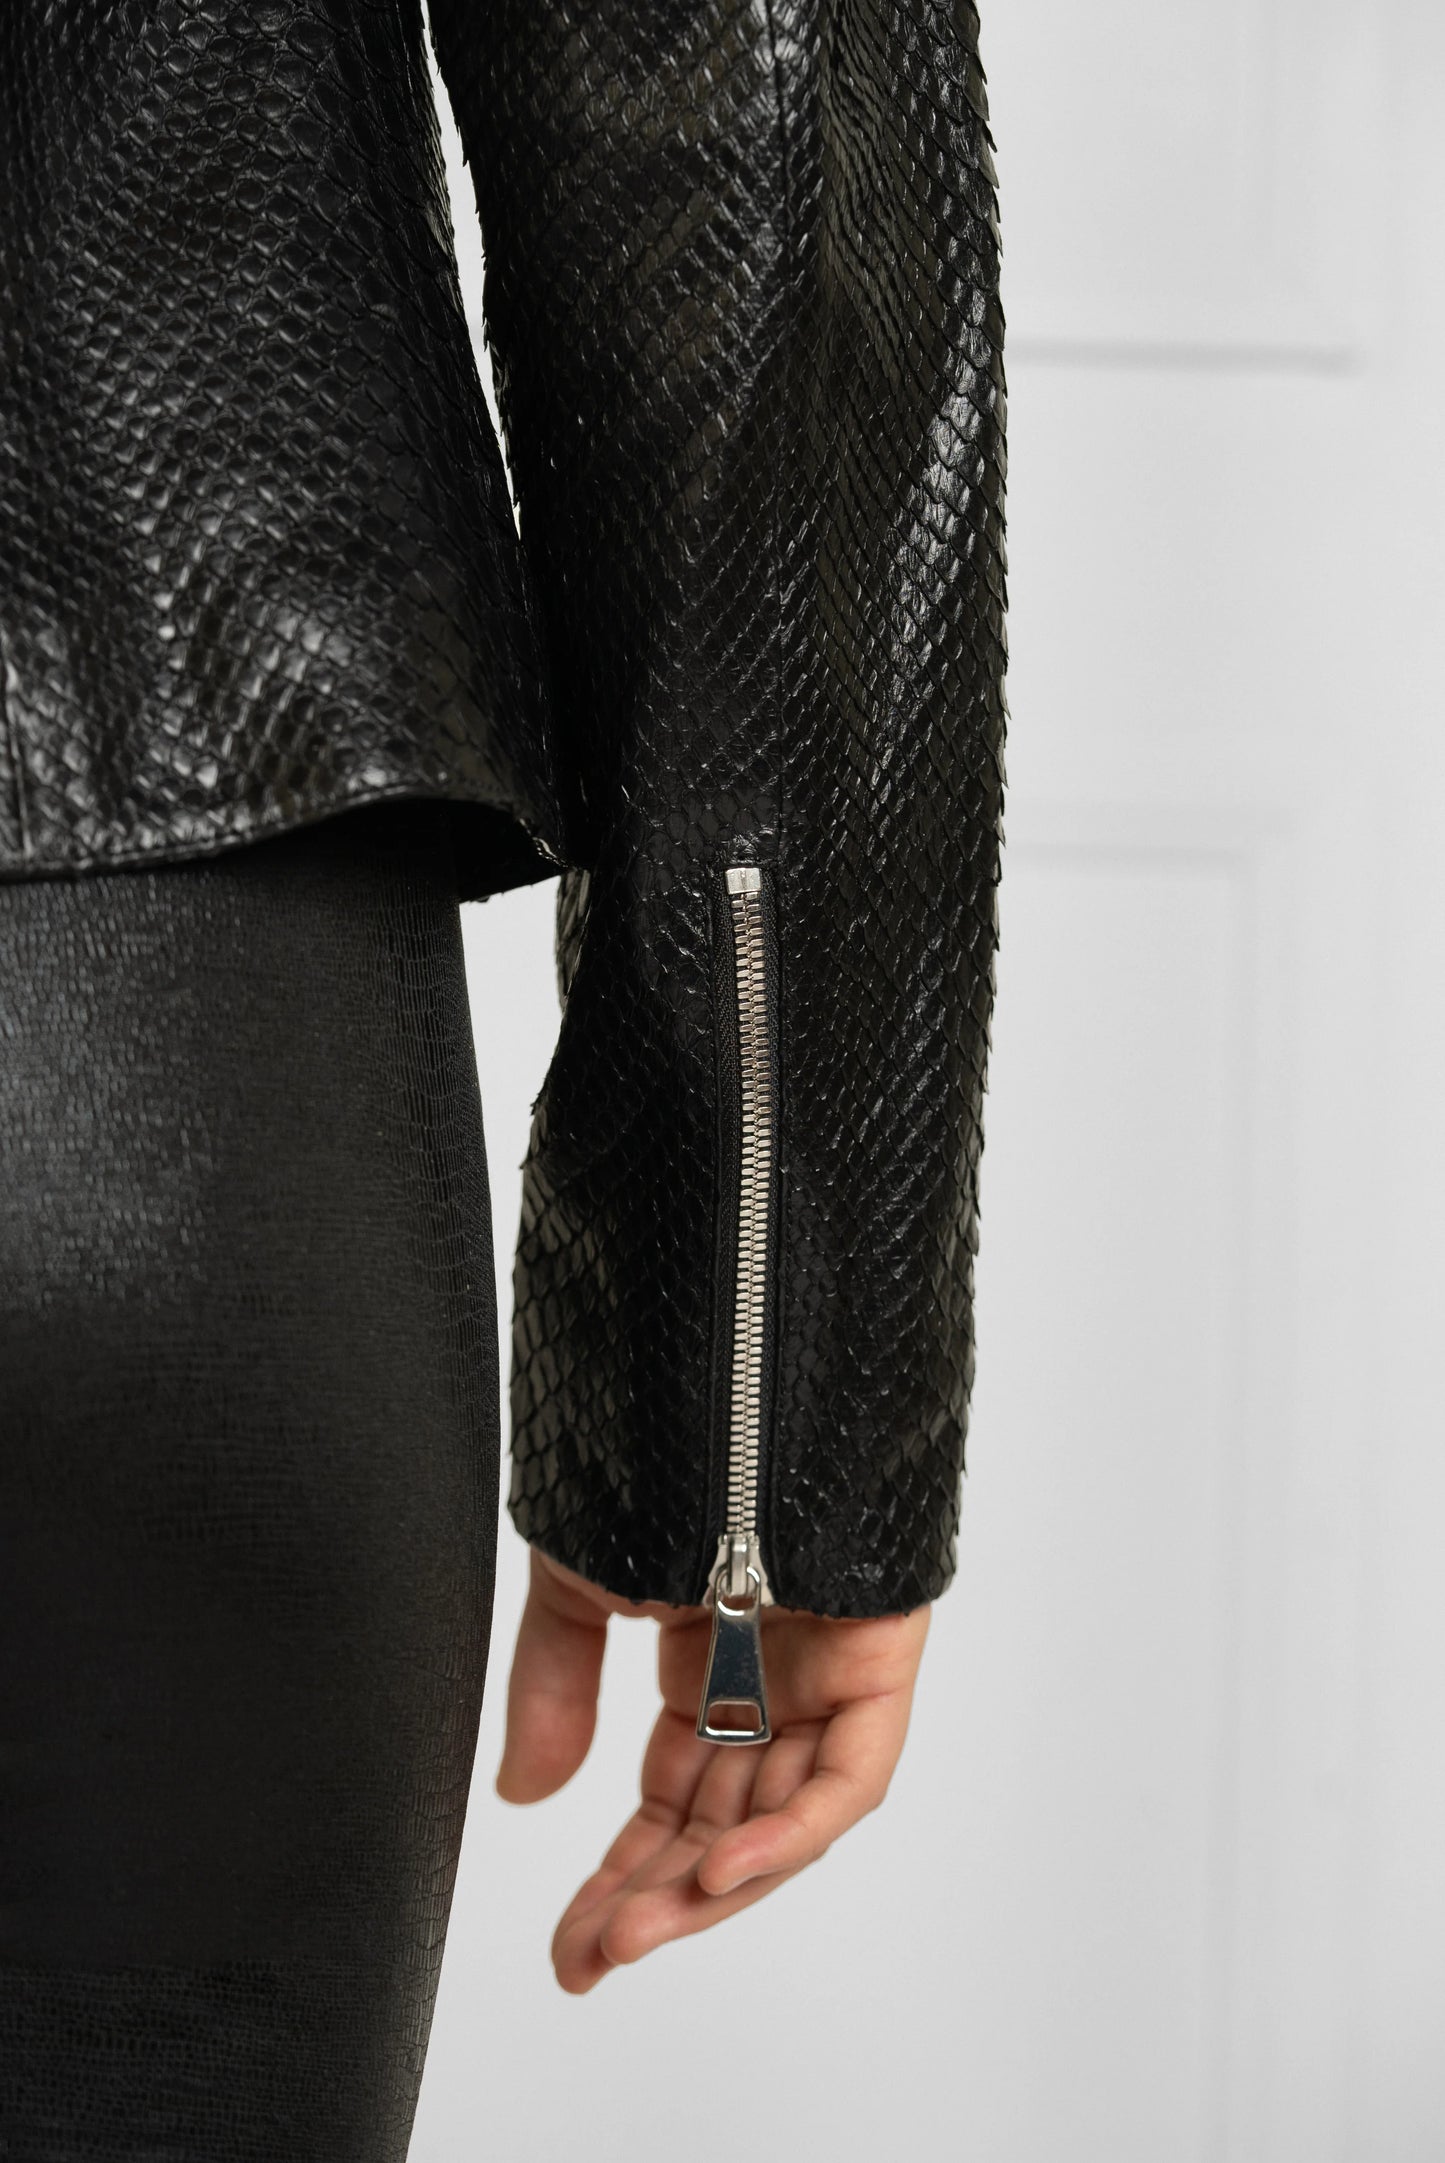 Black python  Leather Jacket with Chinchilla Fur Collar